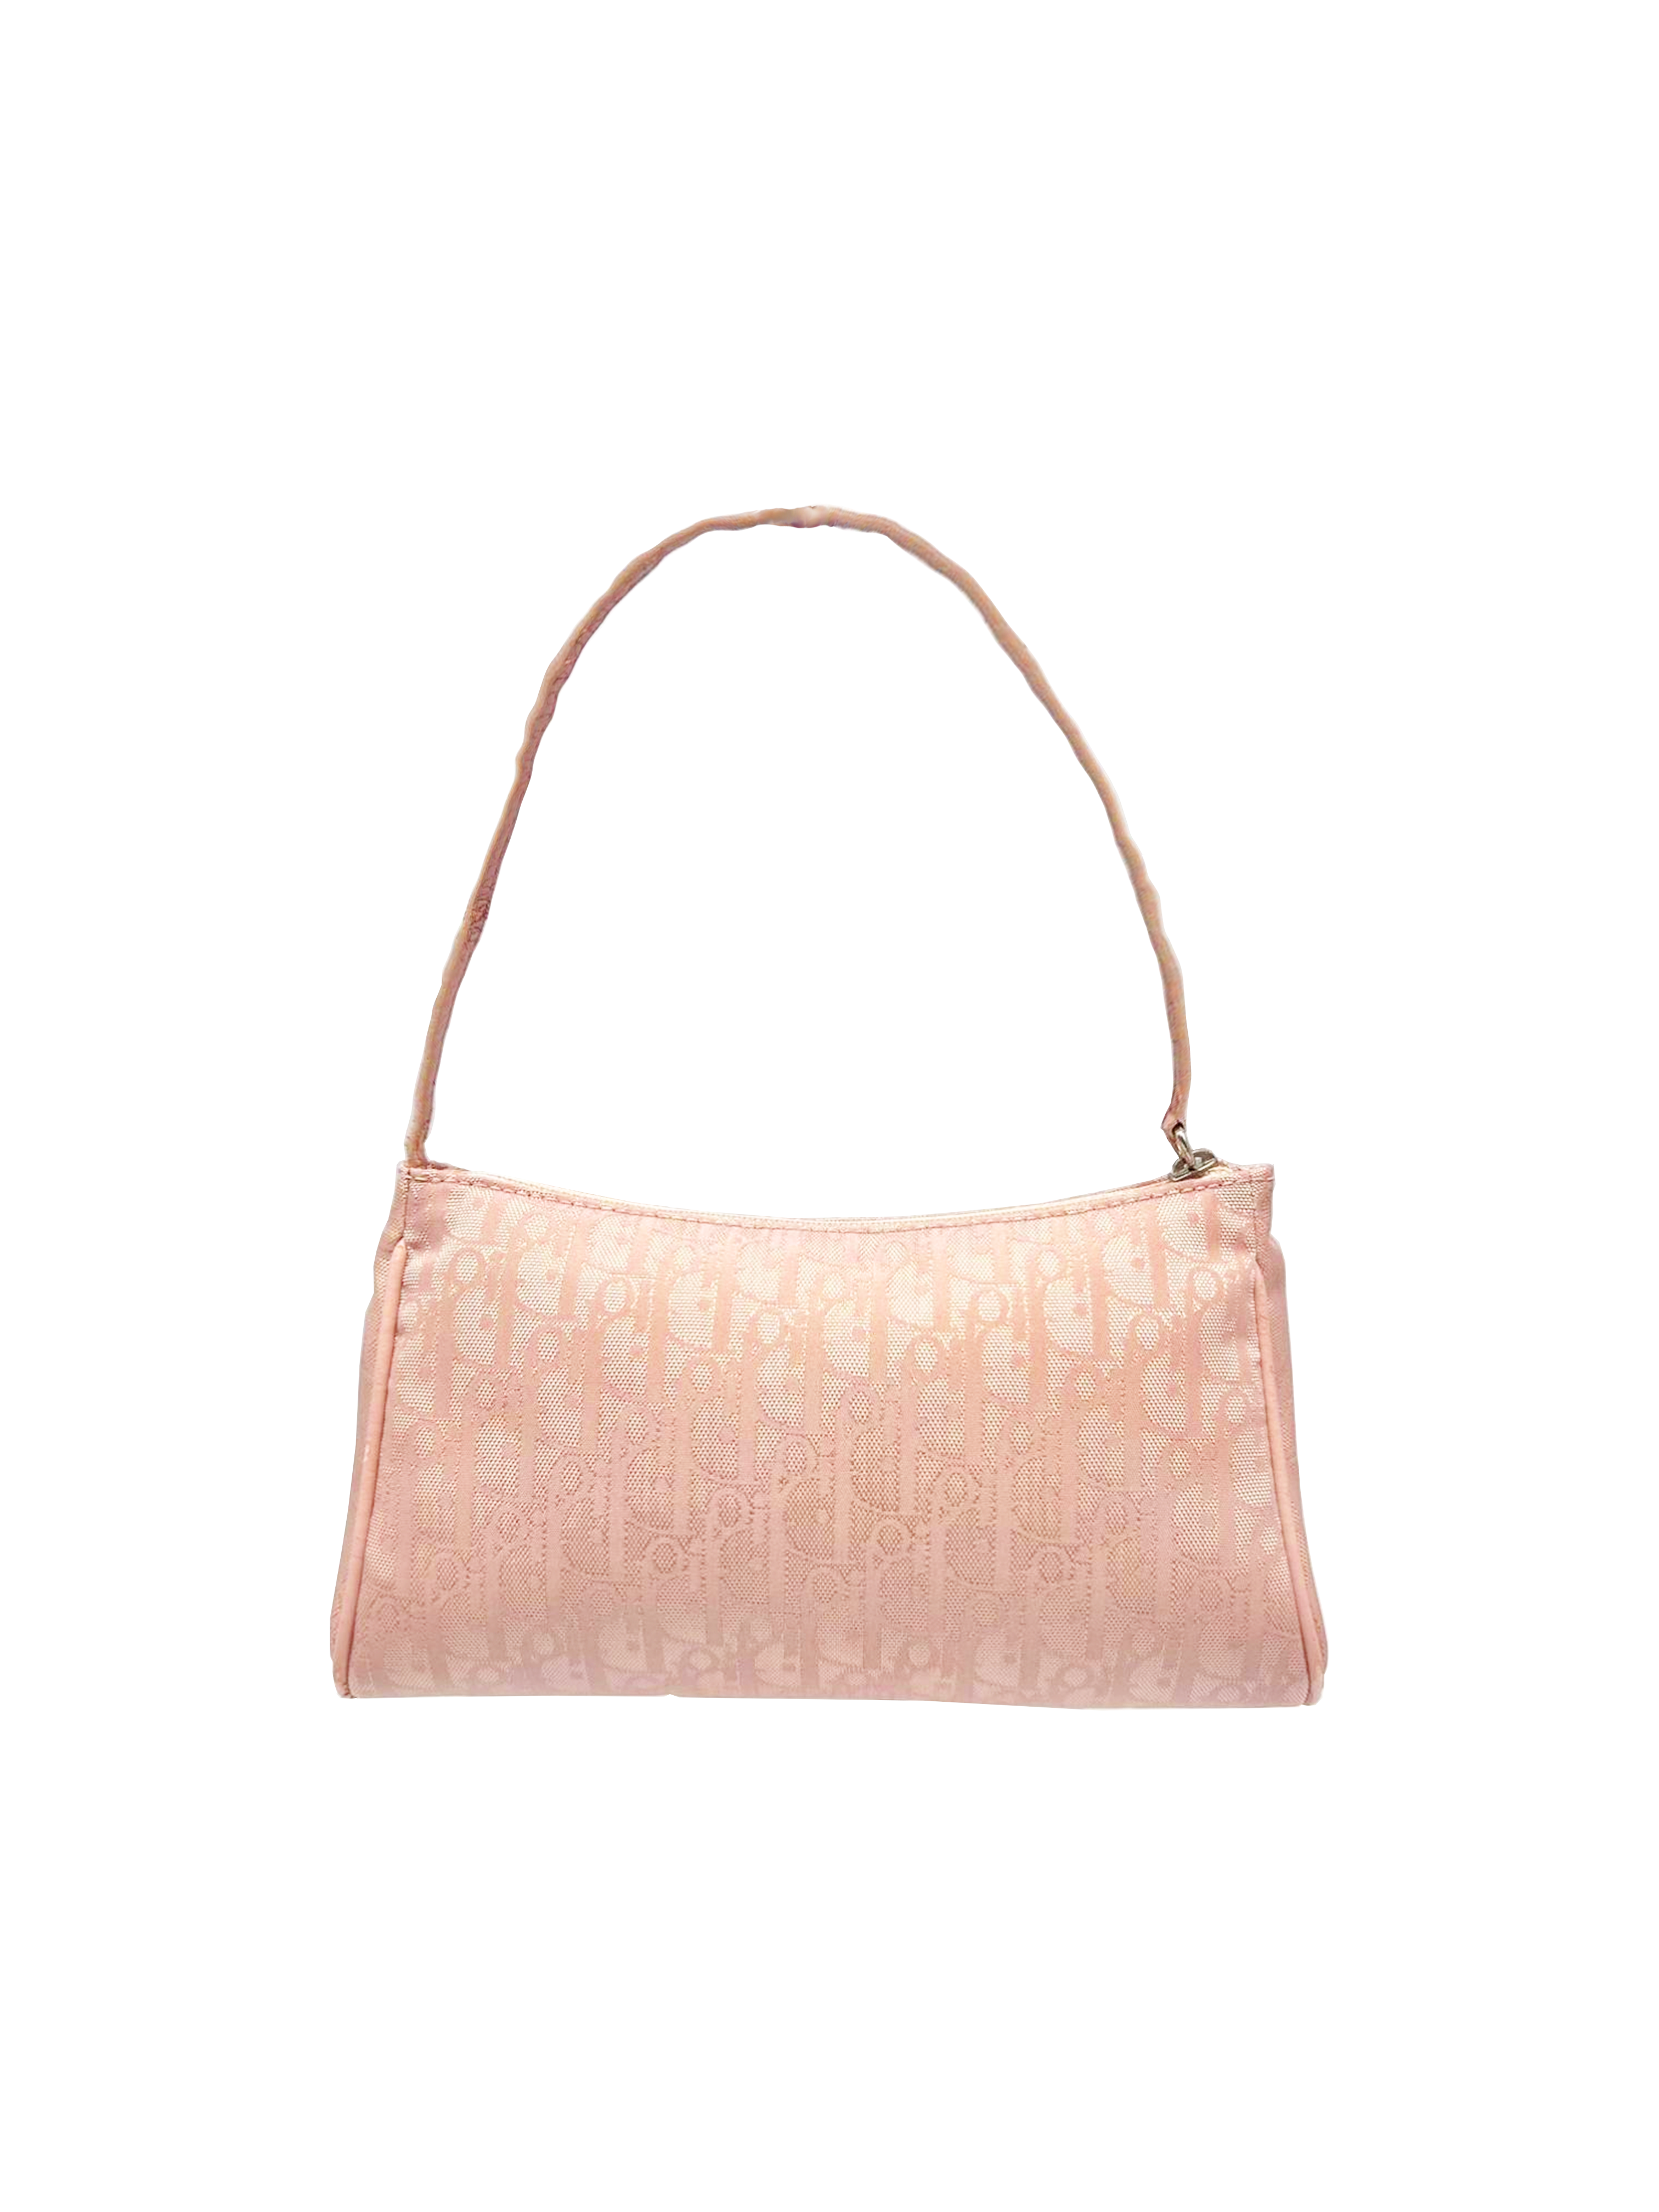 Christian Dior 2000s Pink Monogram Pouch Handbag